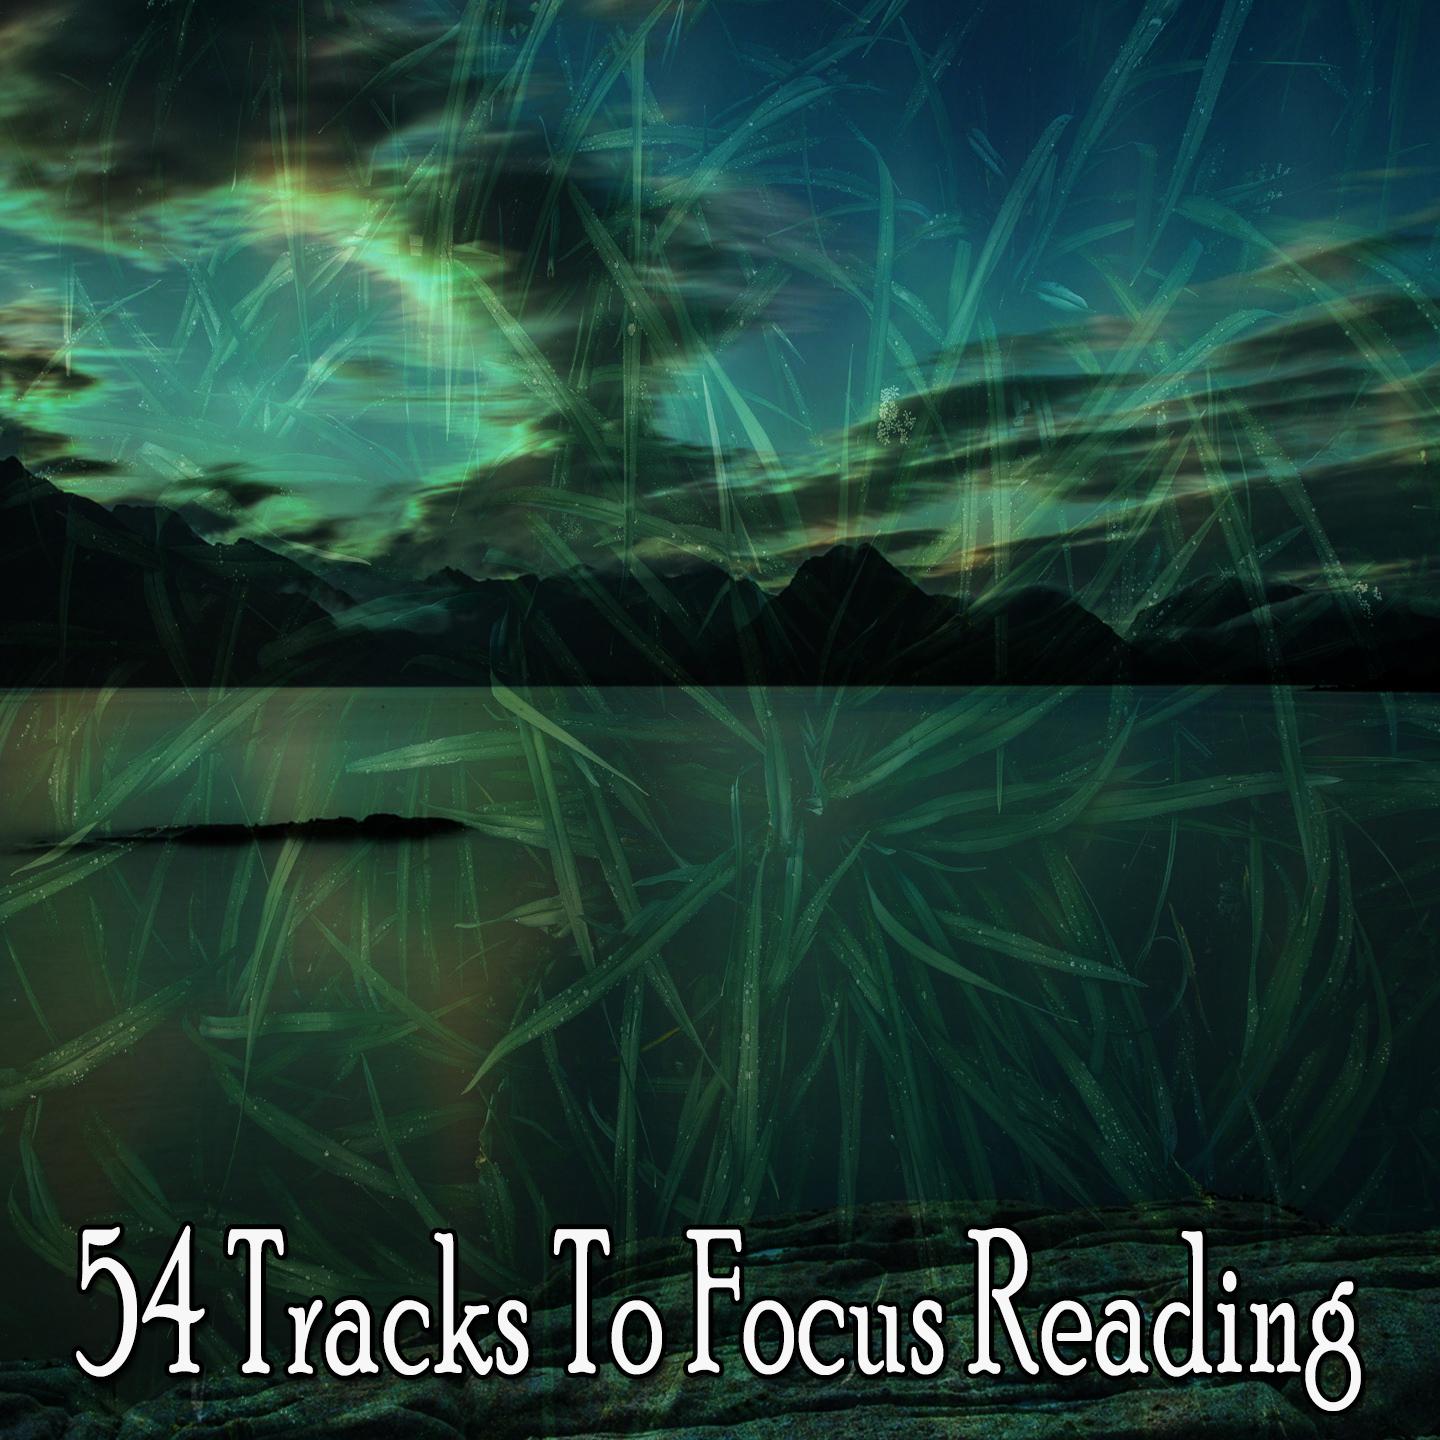 54 Tracks to Focus Reading